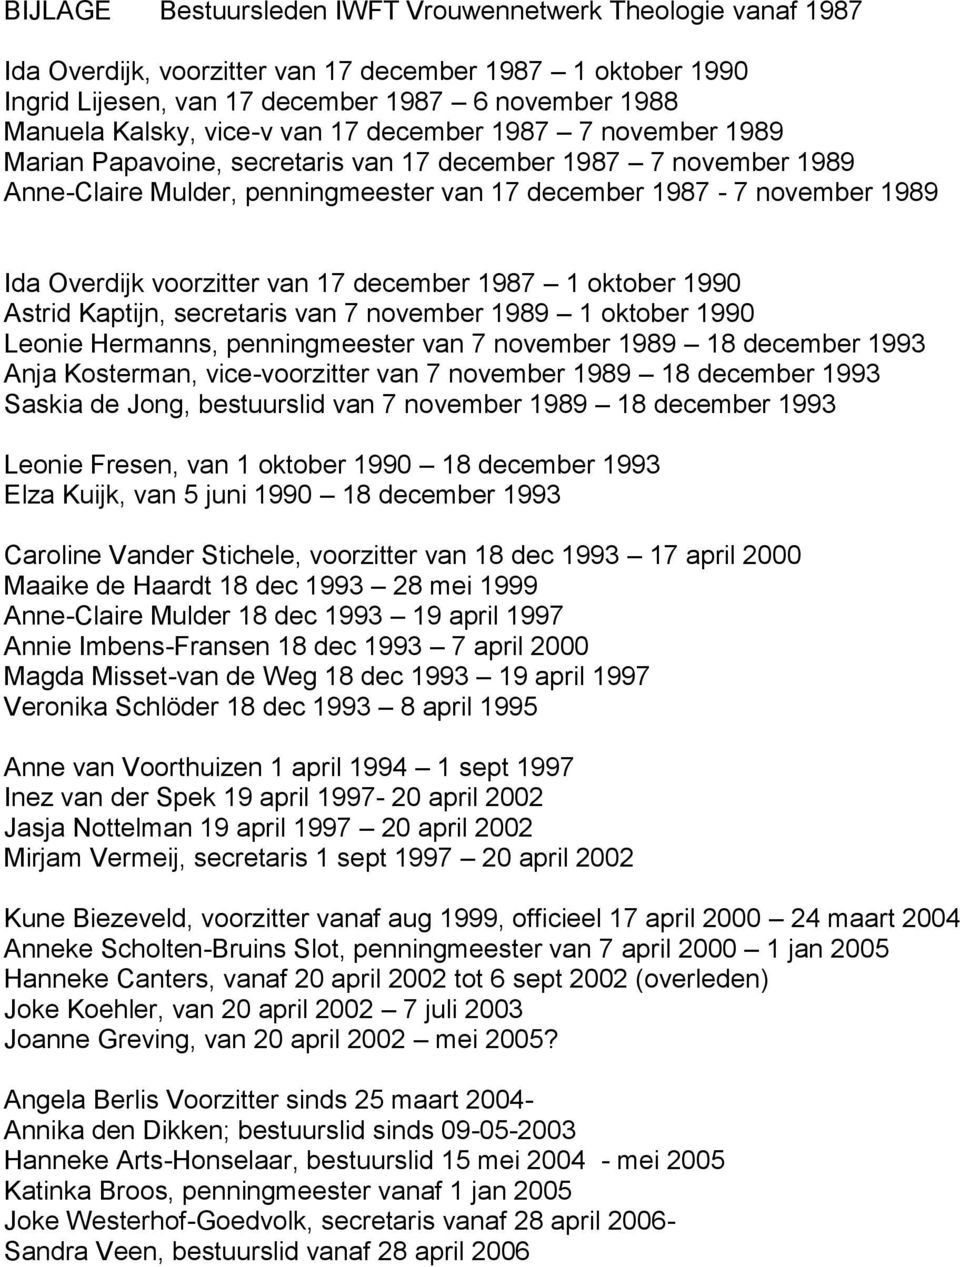 van 17 december 1987 1 oktober 1990 Astrid Kaptijn, secretaris van 7 november 1989 1 oktober 1990 Leonie Hermanns, penningmeester van 7 november 1989 18 december 1993 Anja Kosterman, vice-voorzitter